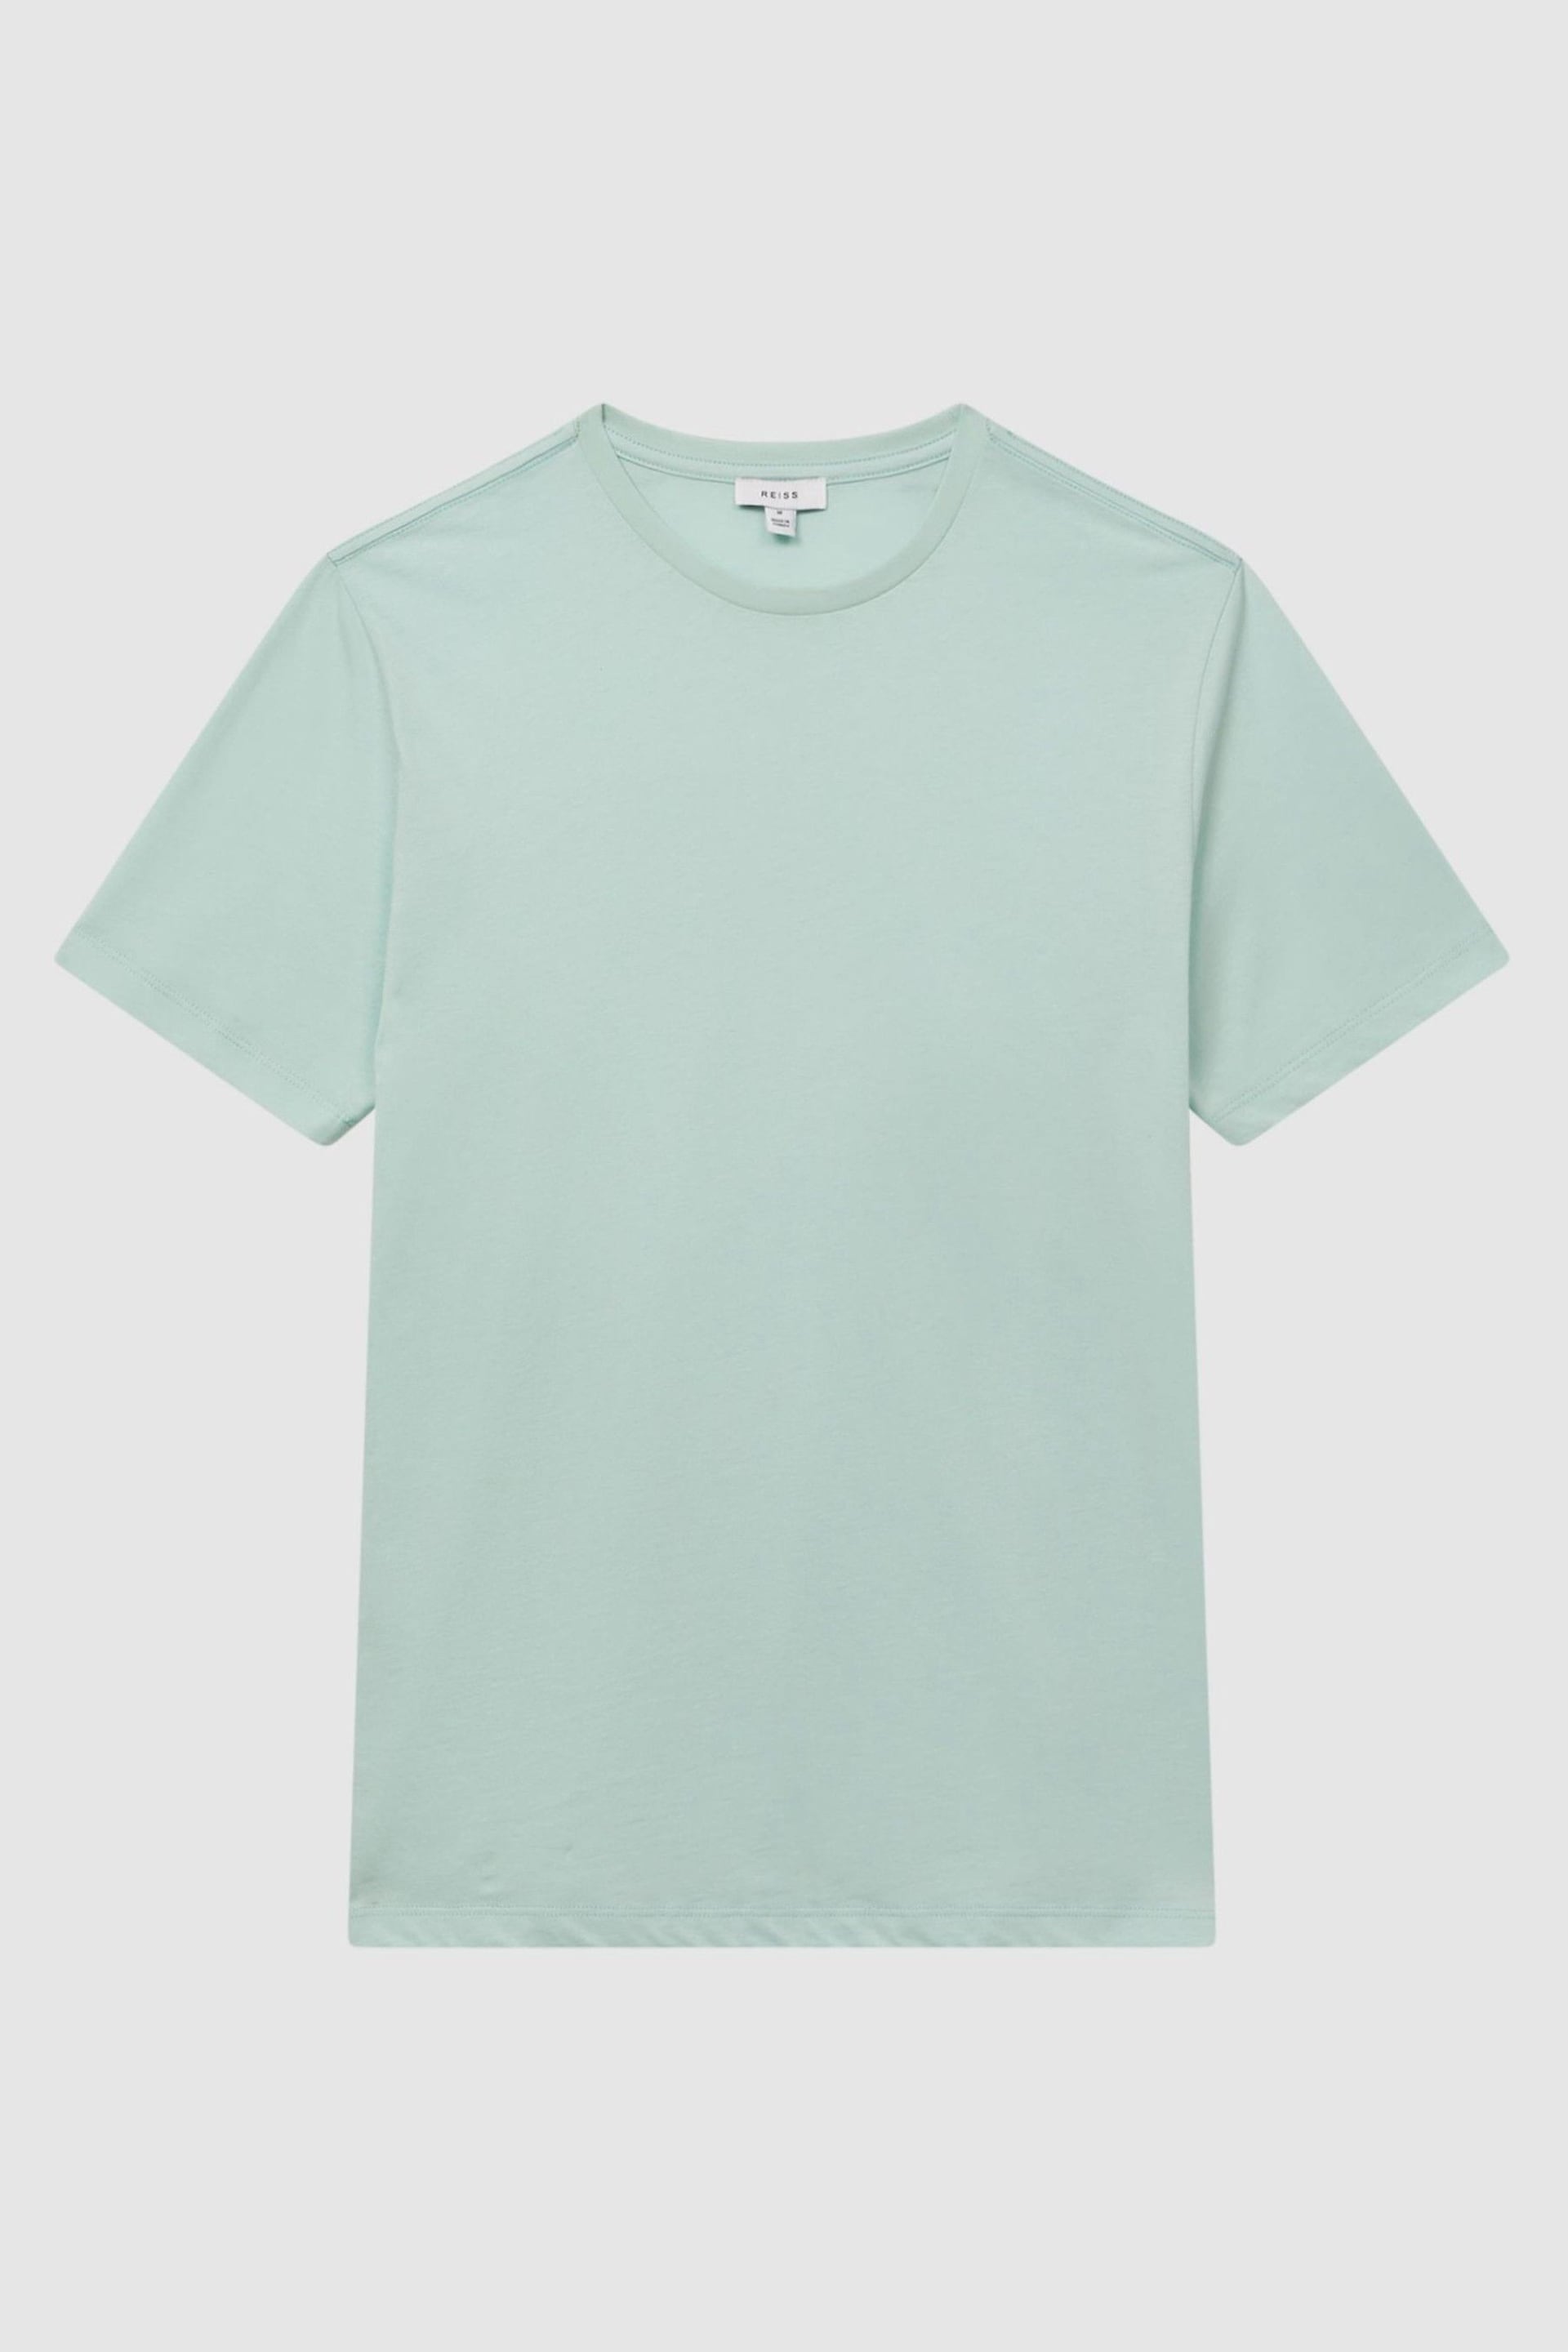 Reiss Mint Bless Cotton Crew Neck T-Shirt - Image 2 of 6